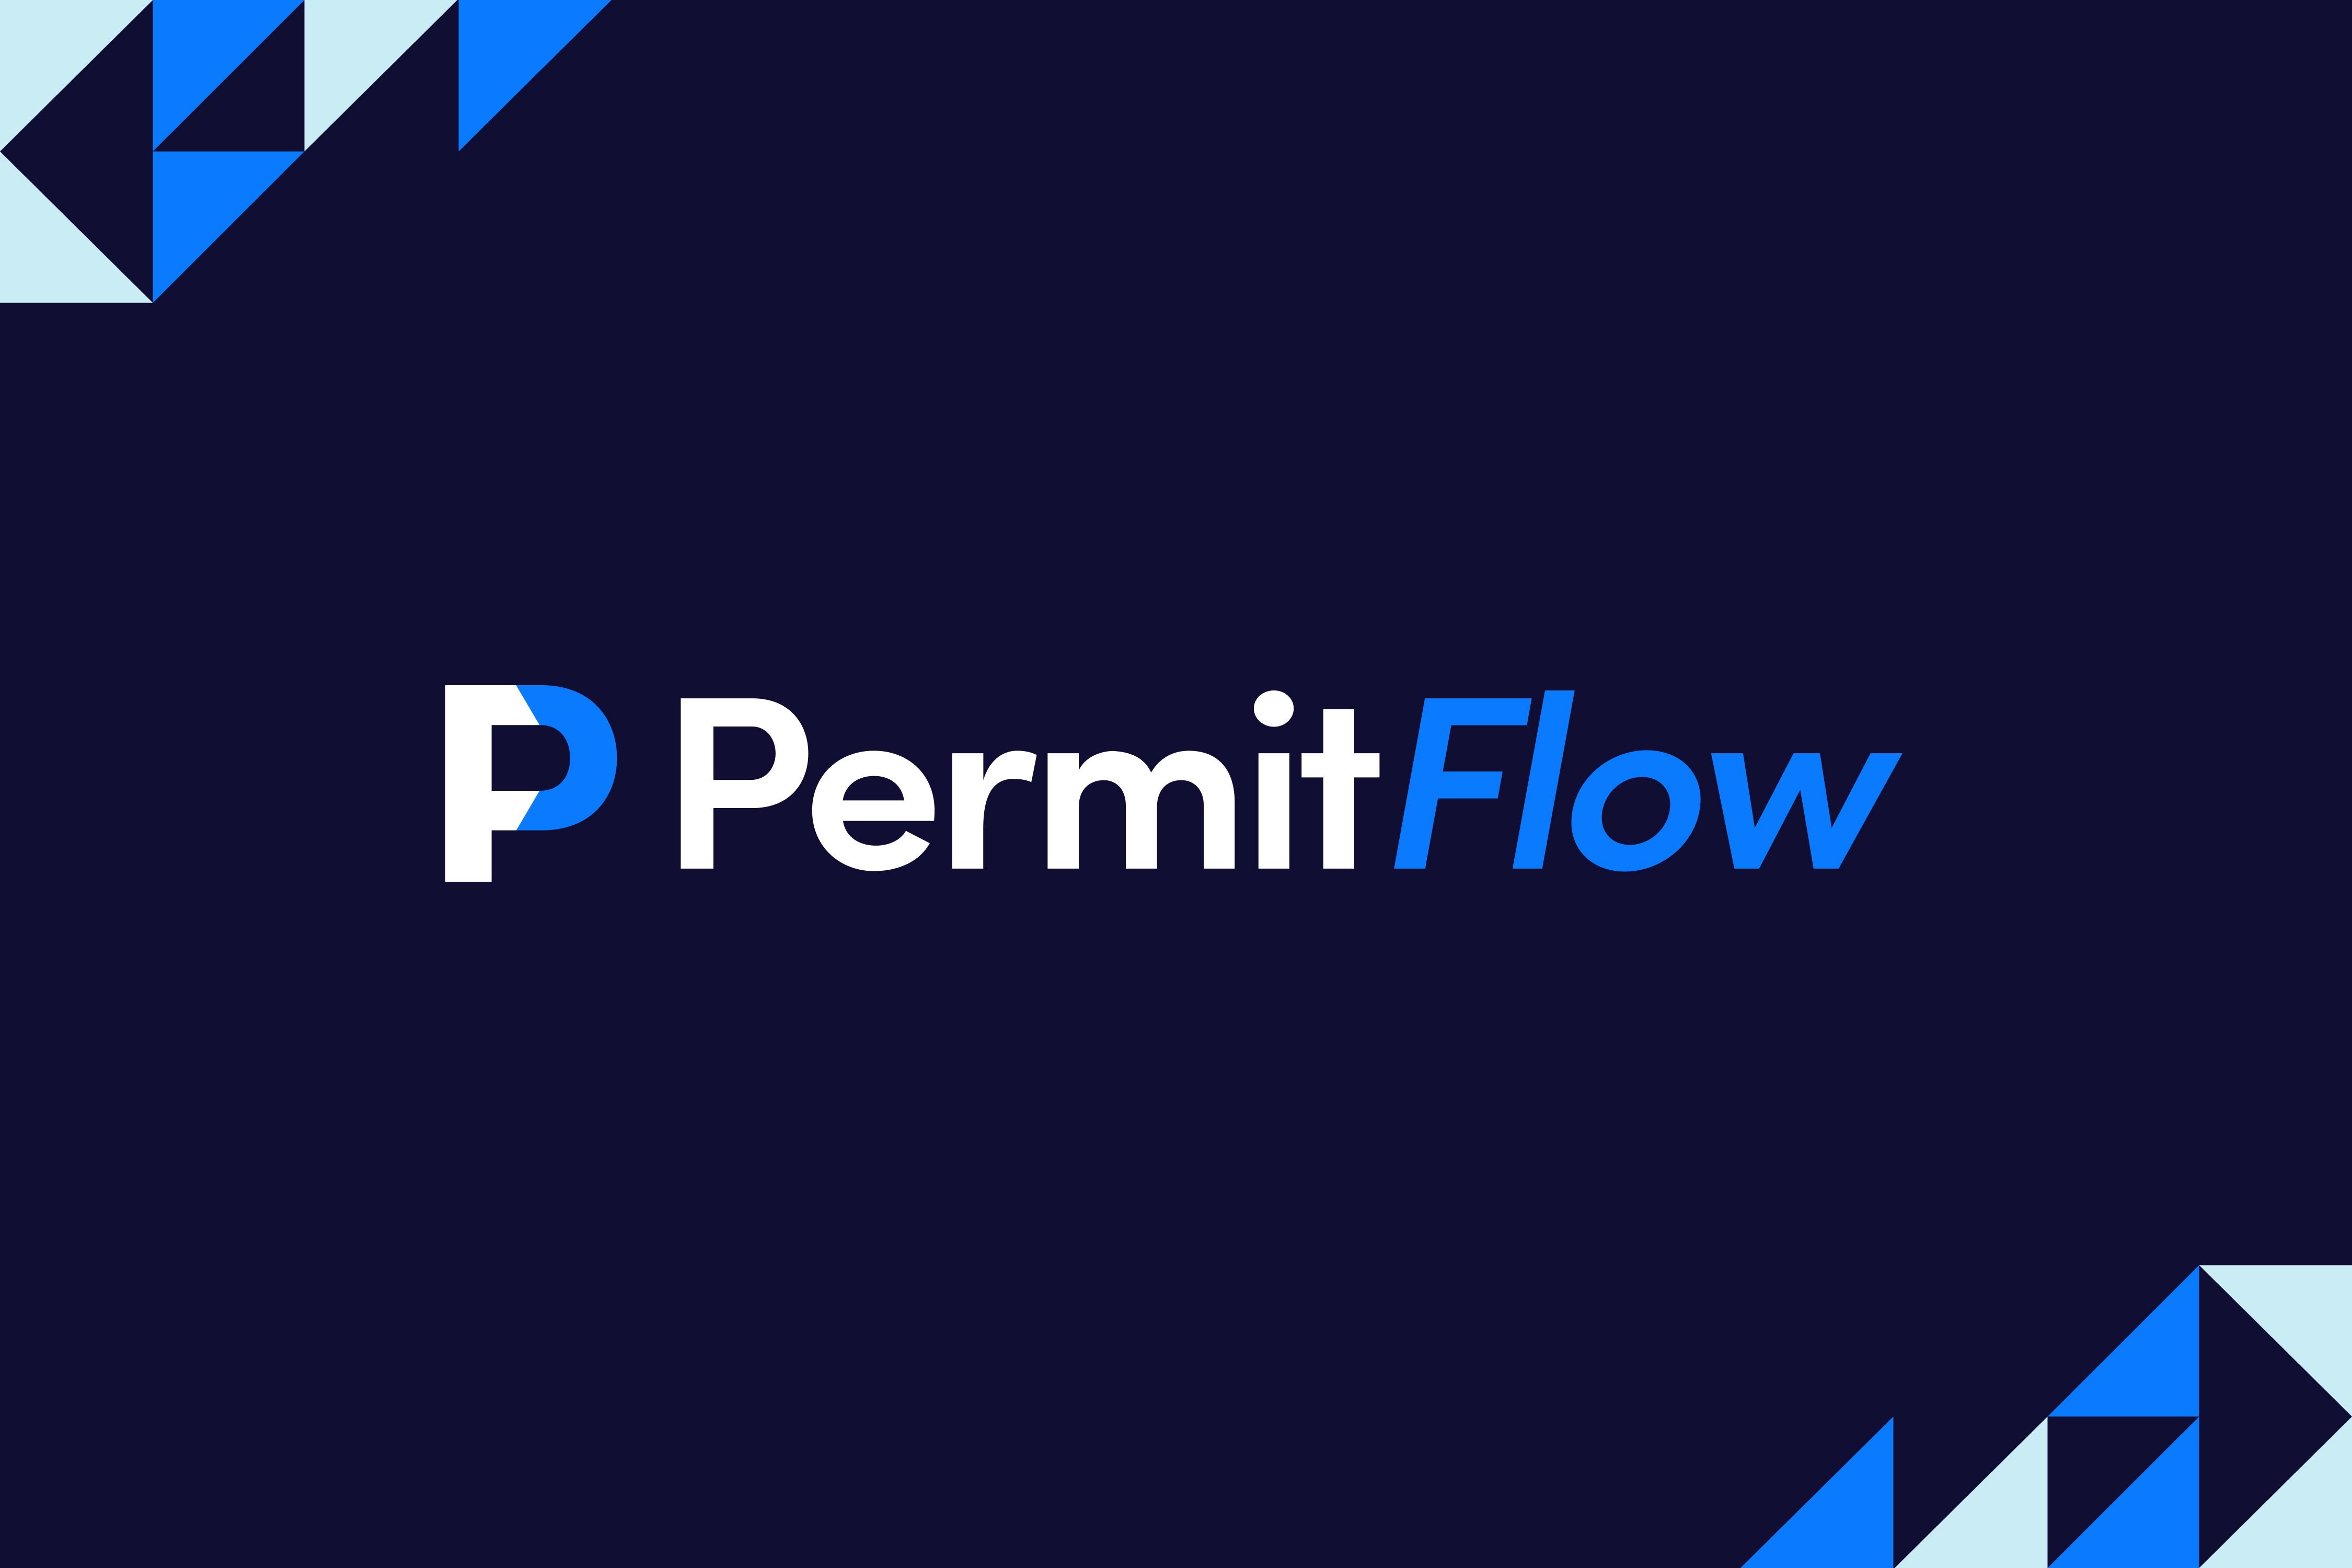 PermitFlow: The Pre-Construction Platform